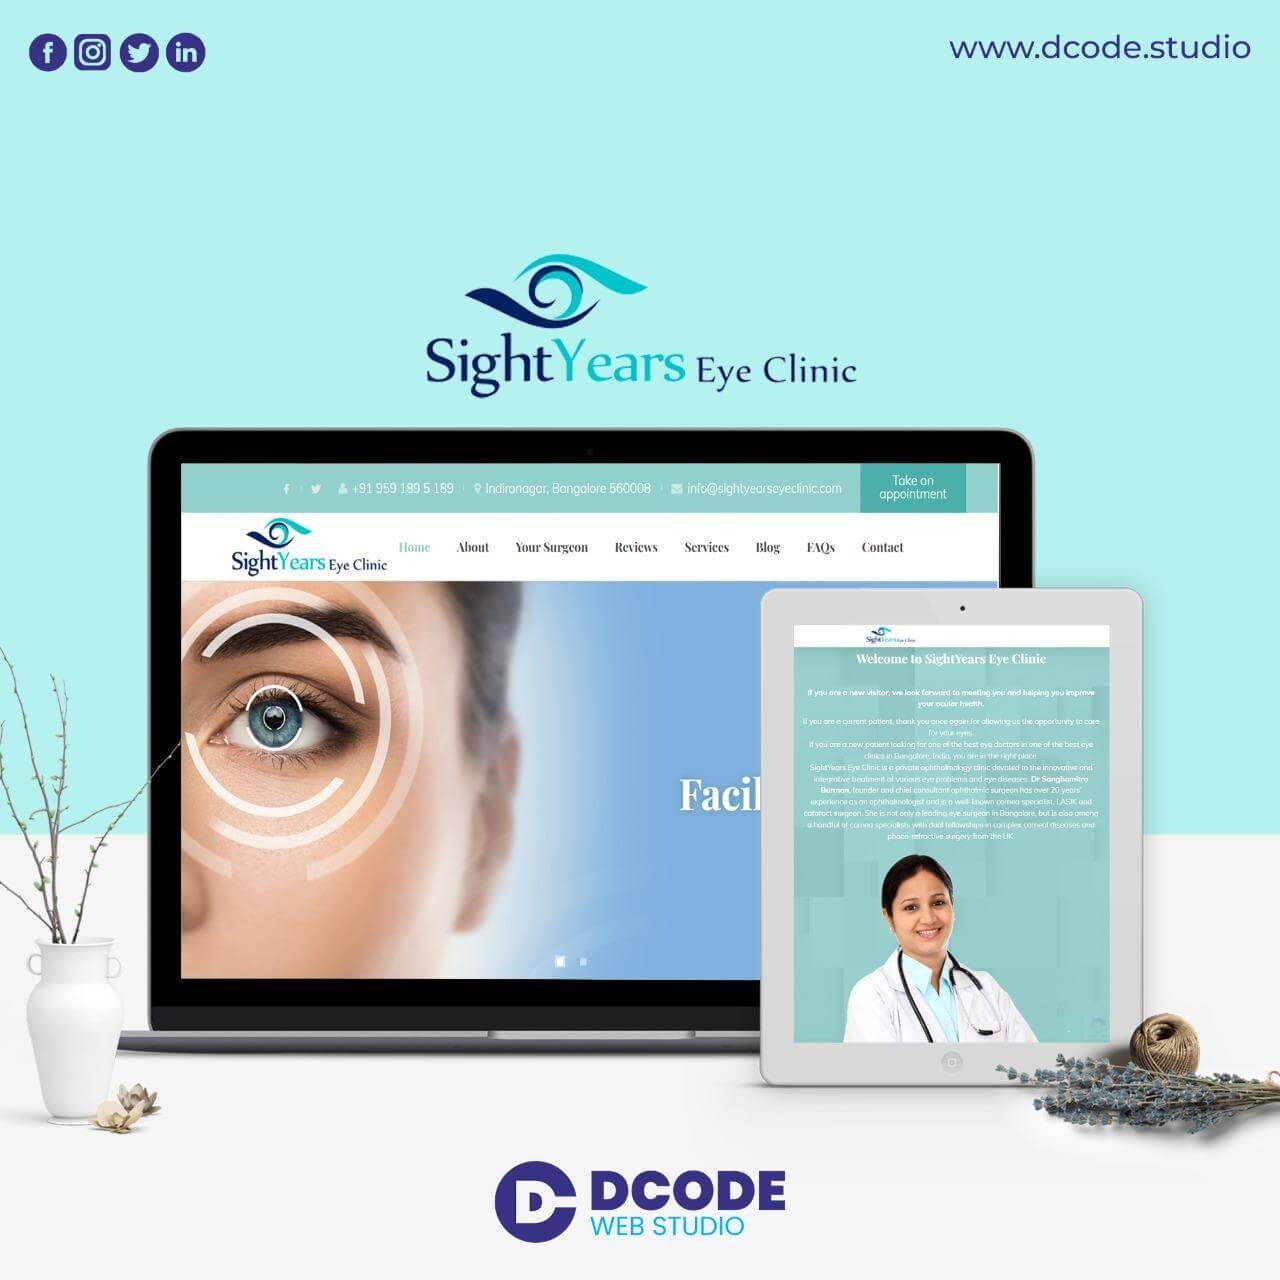 Sightyears Eye Clinic Mockup in Laptop, Mobile, and Tablet sizes, Sightyears Eye Clinic Website Mockup created by Dcode Web Studio, Sightyears Eye Clinic Website Designed and Developed by Dcode Web Studio Ahmedabad